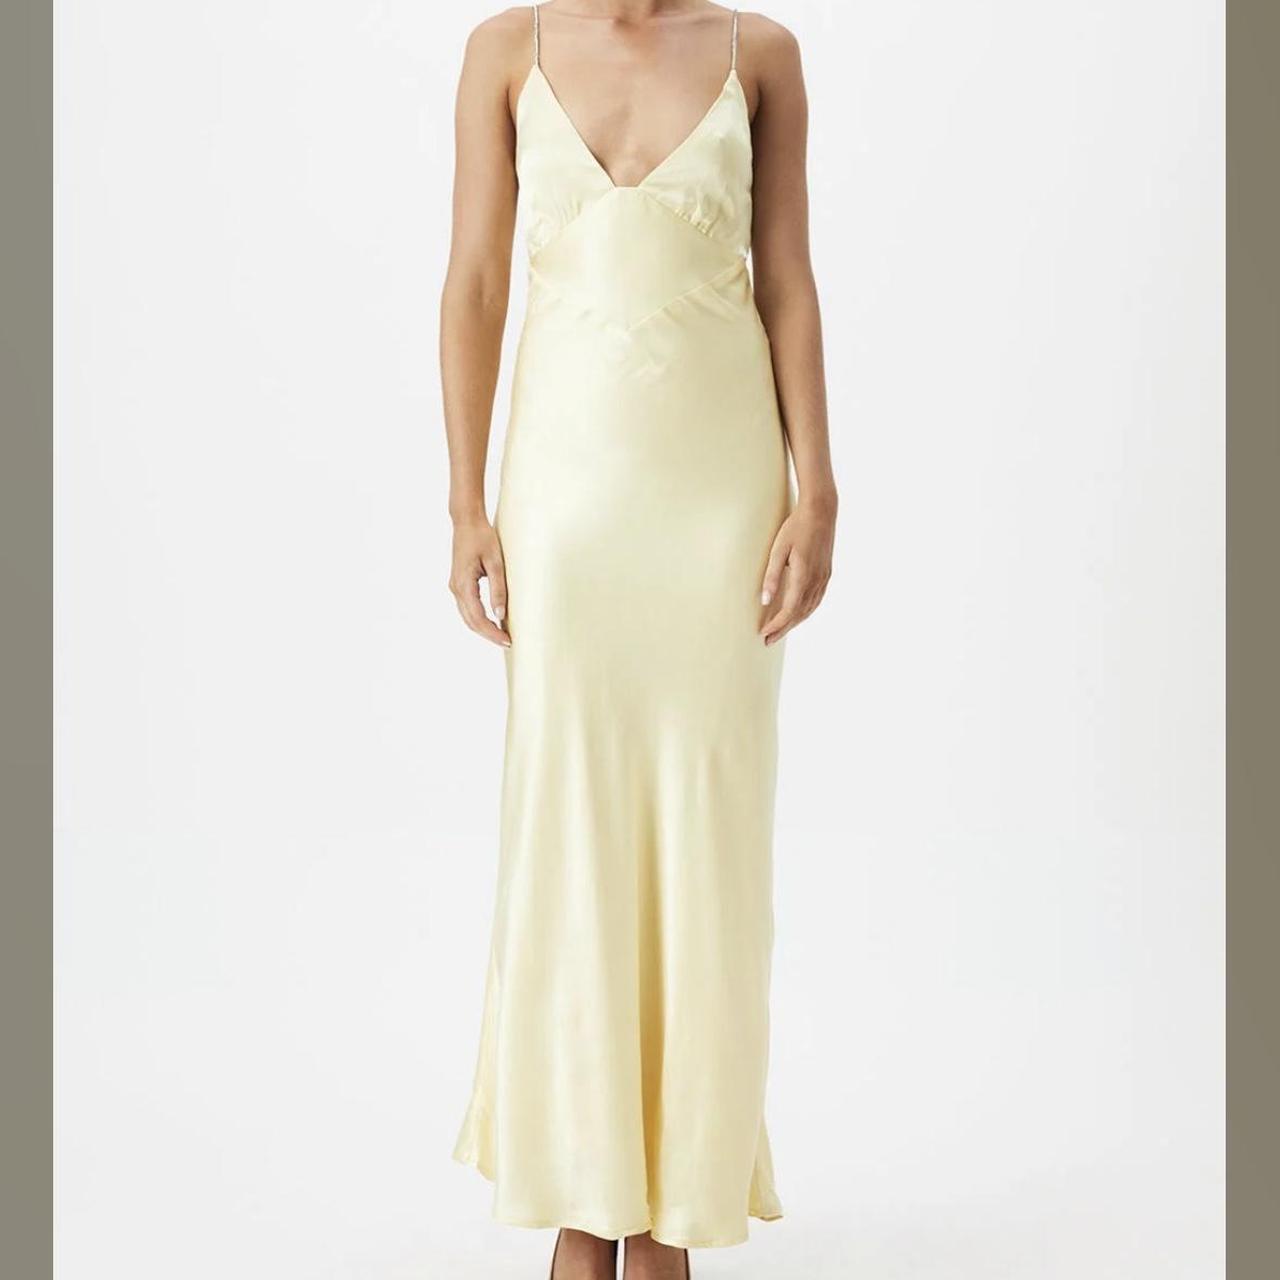 Bardot Capri diamonte slip dress 🍋 Stunning yellow... - Depop